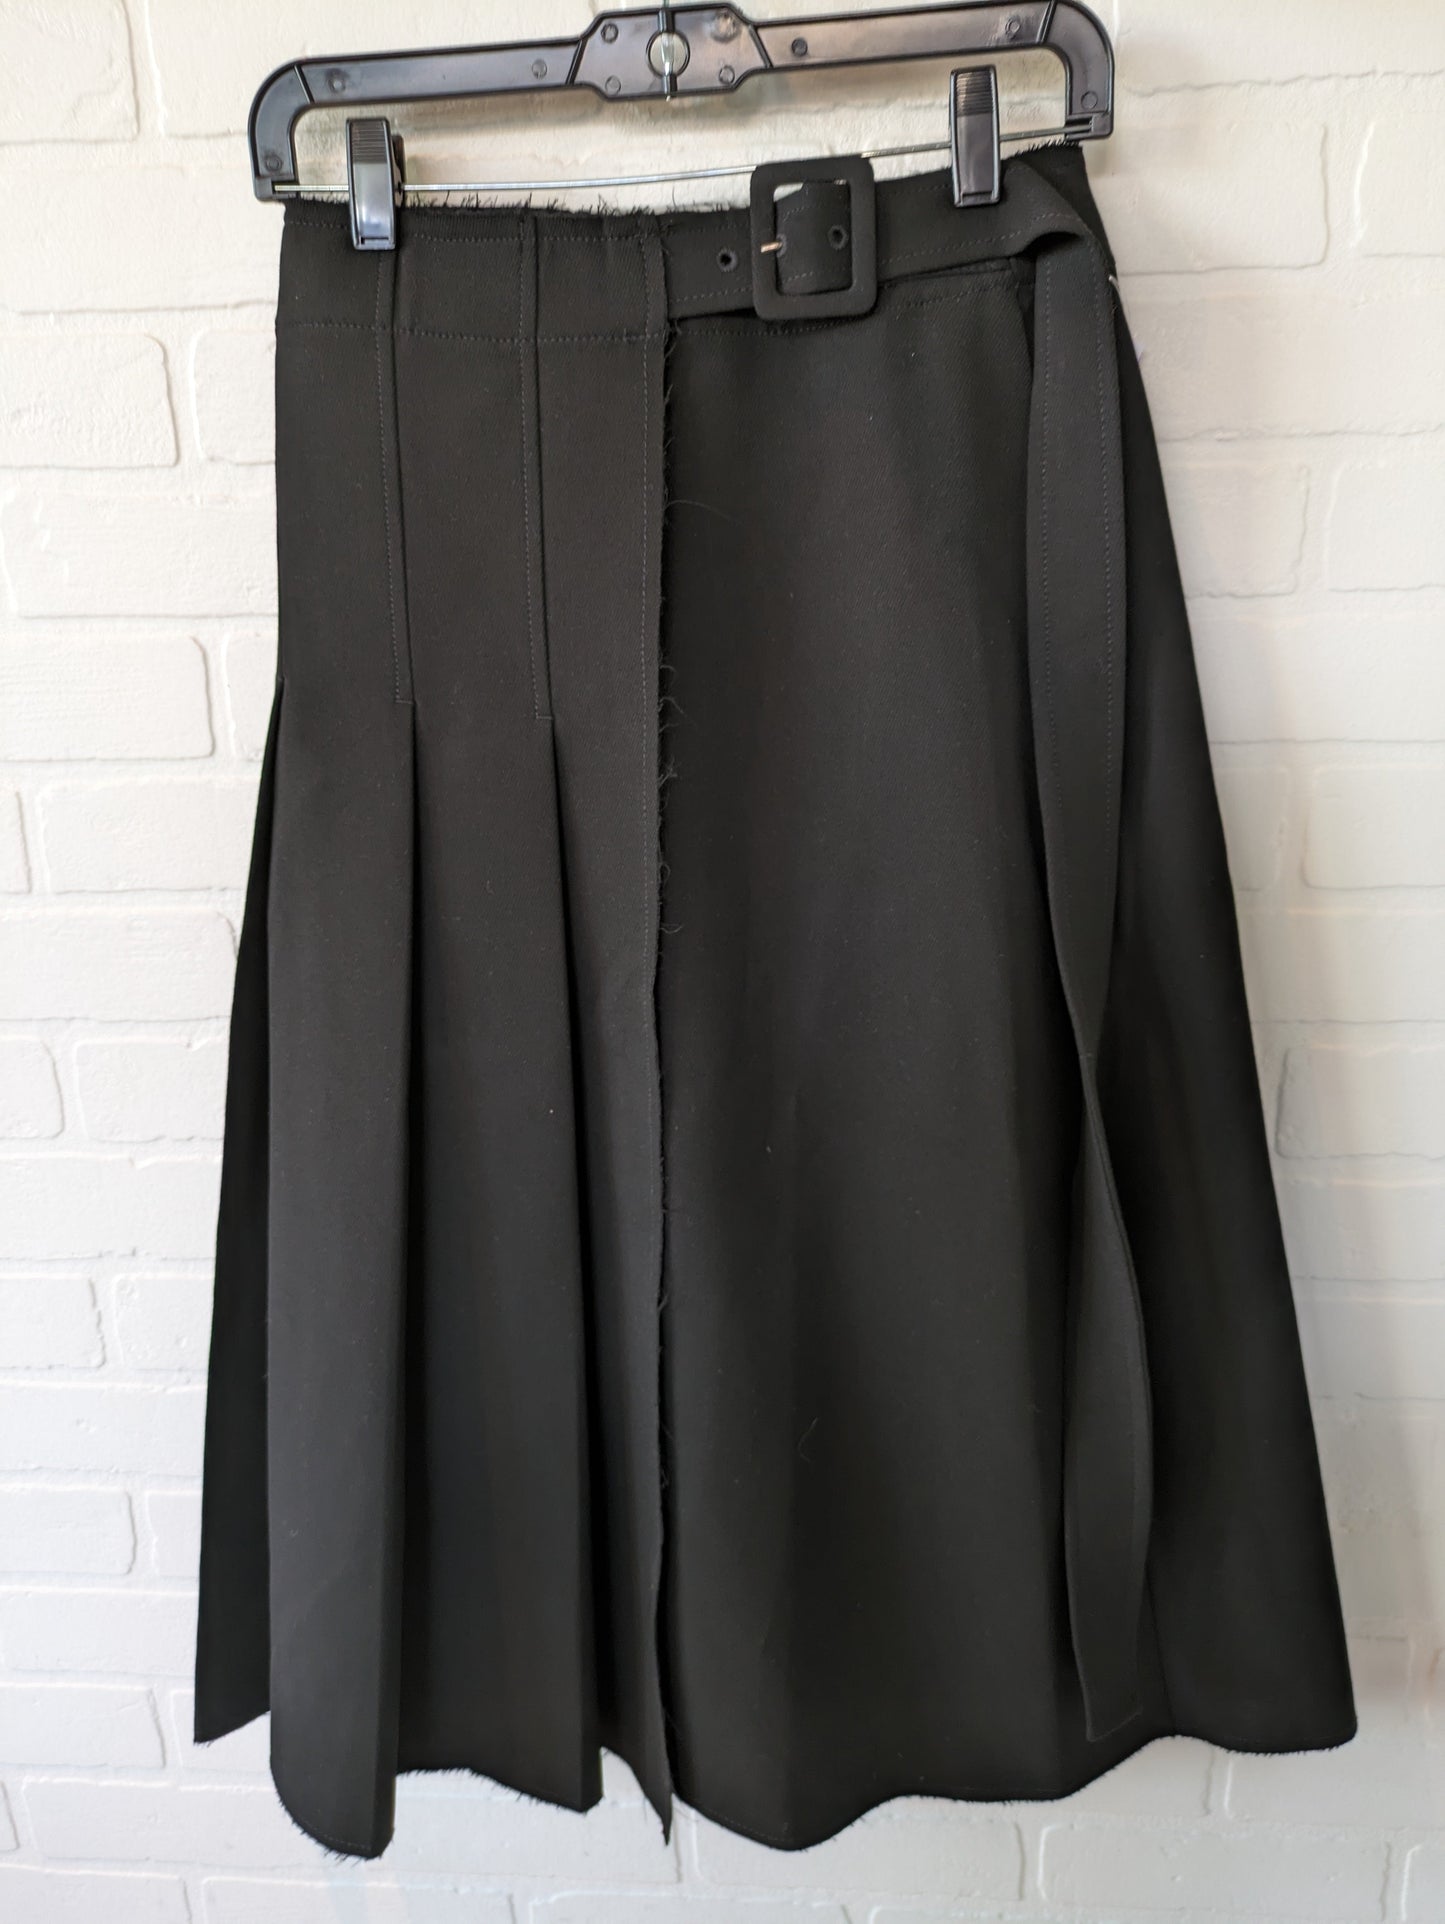 Black Skirt Midi Banana Republic, Size 0